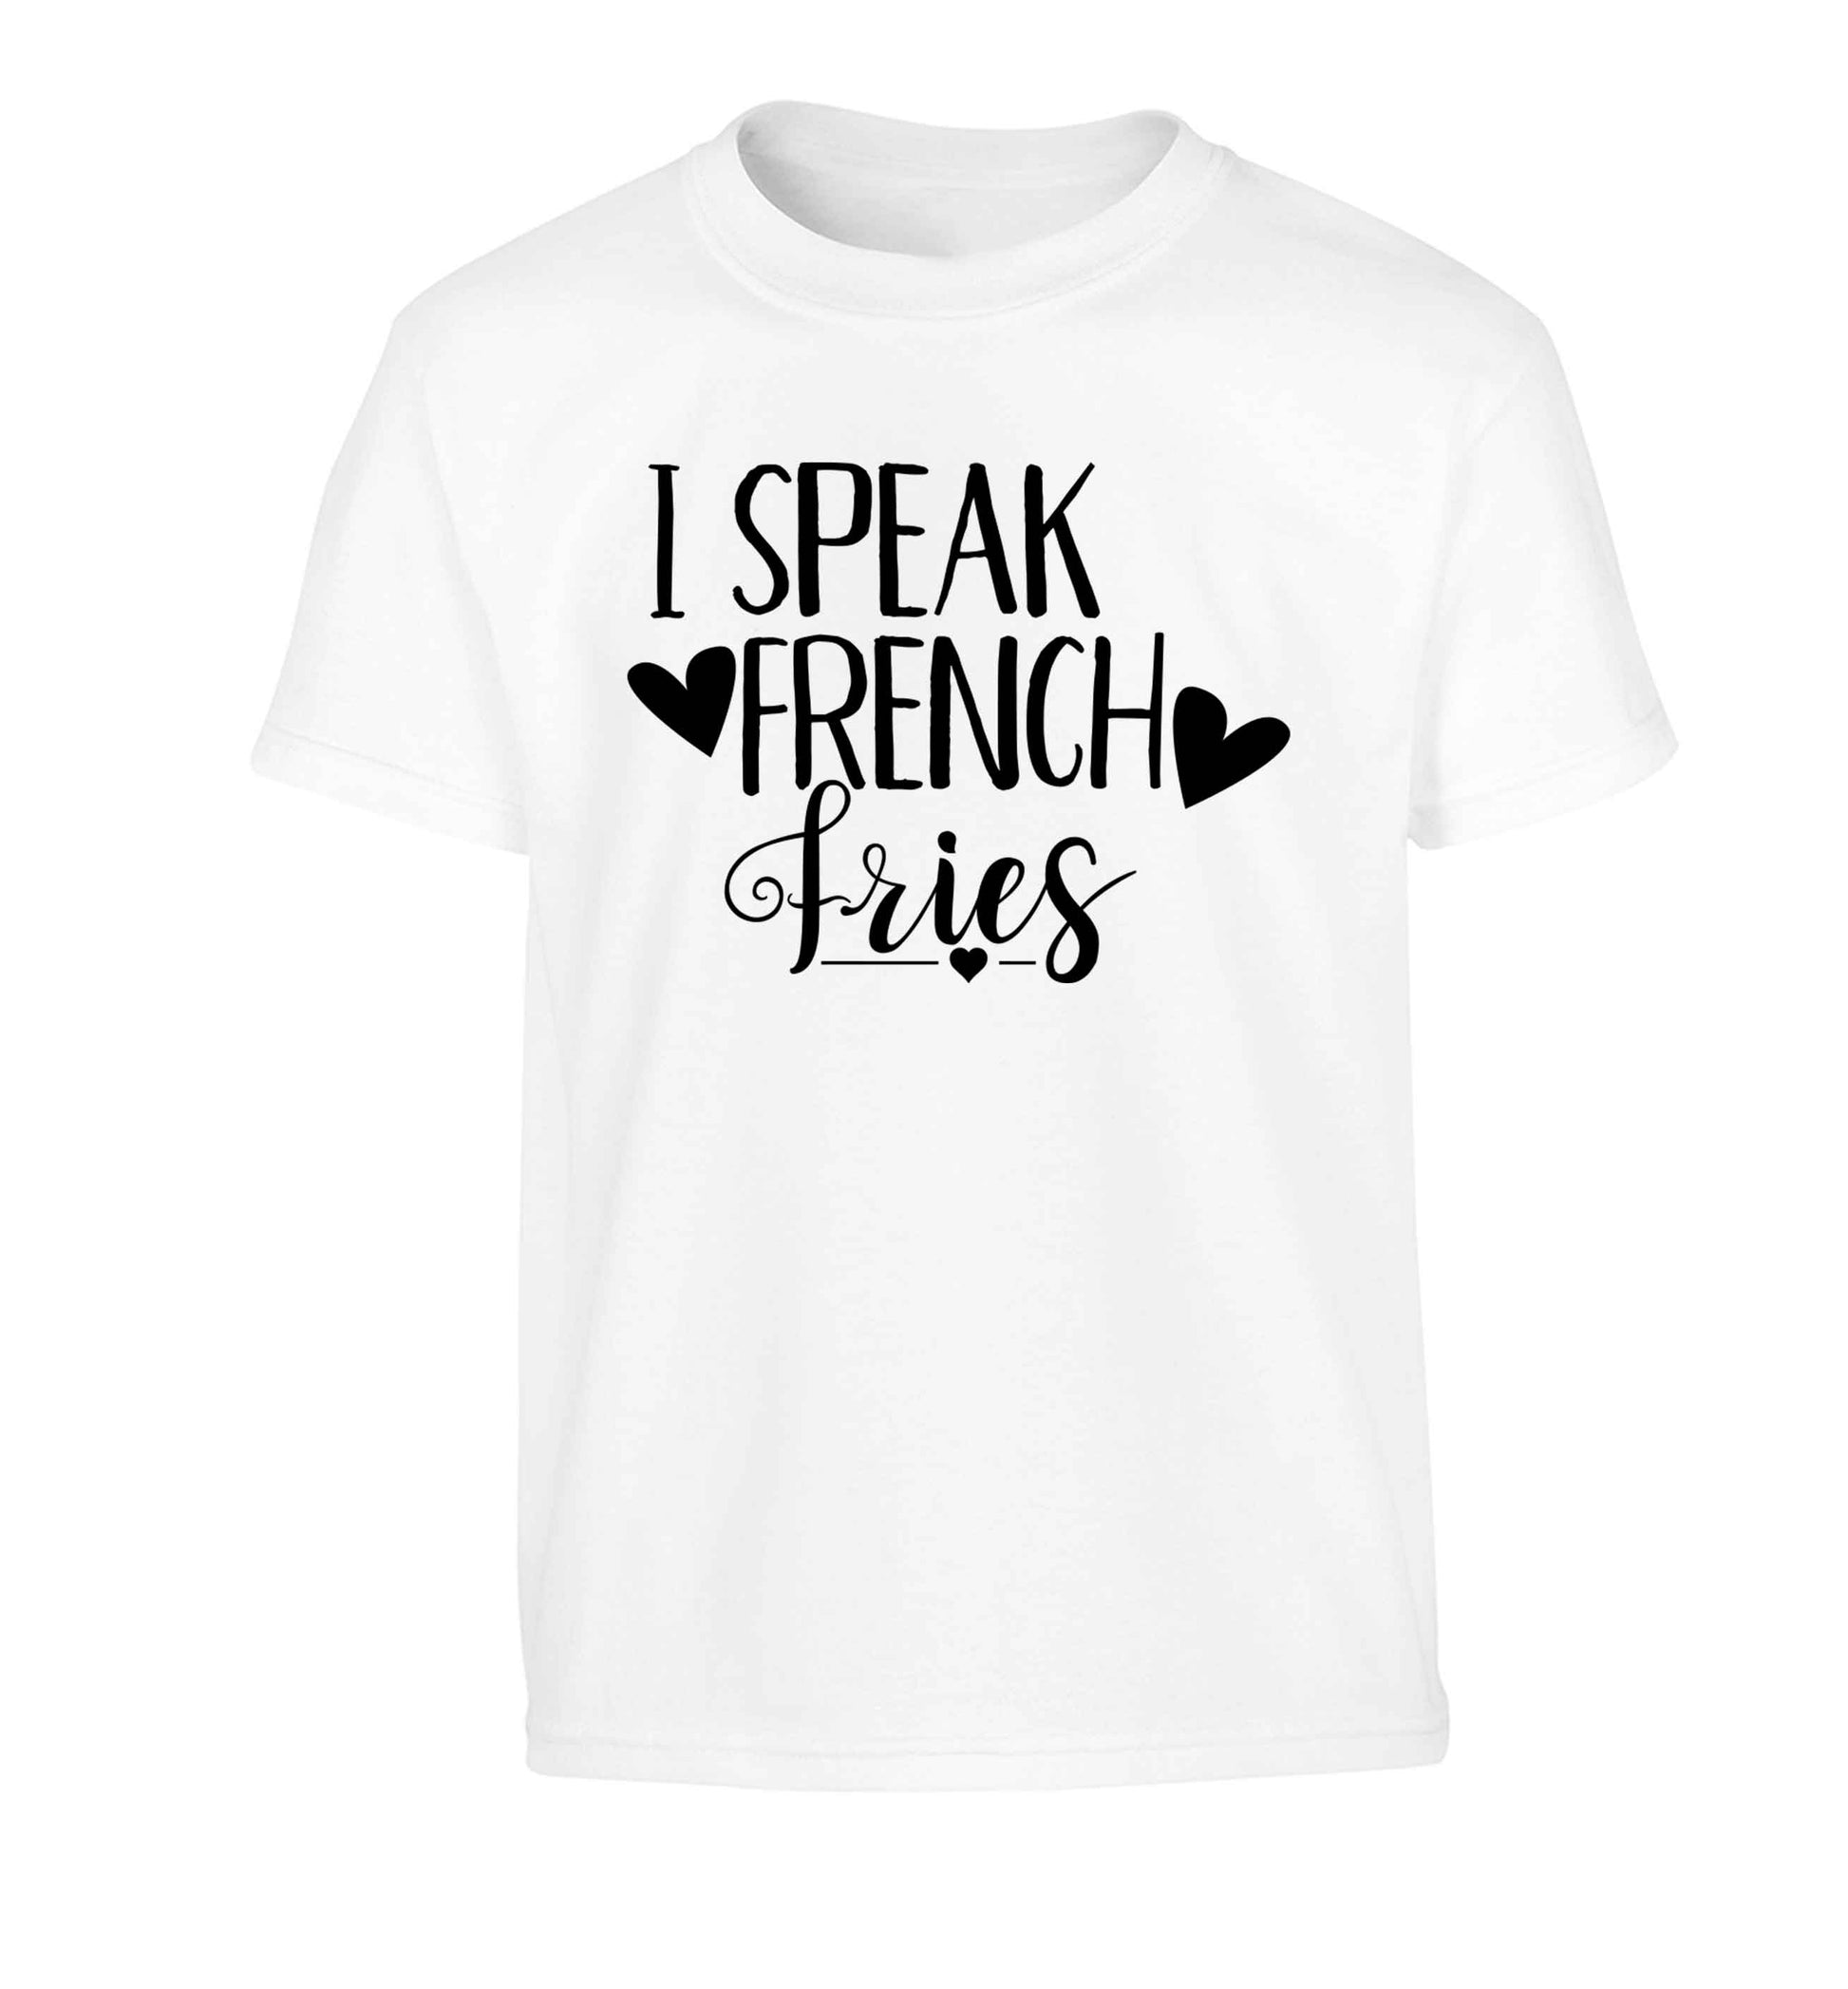 I speak French fries Children's white Tshirt 12-13 Years